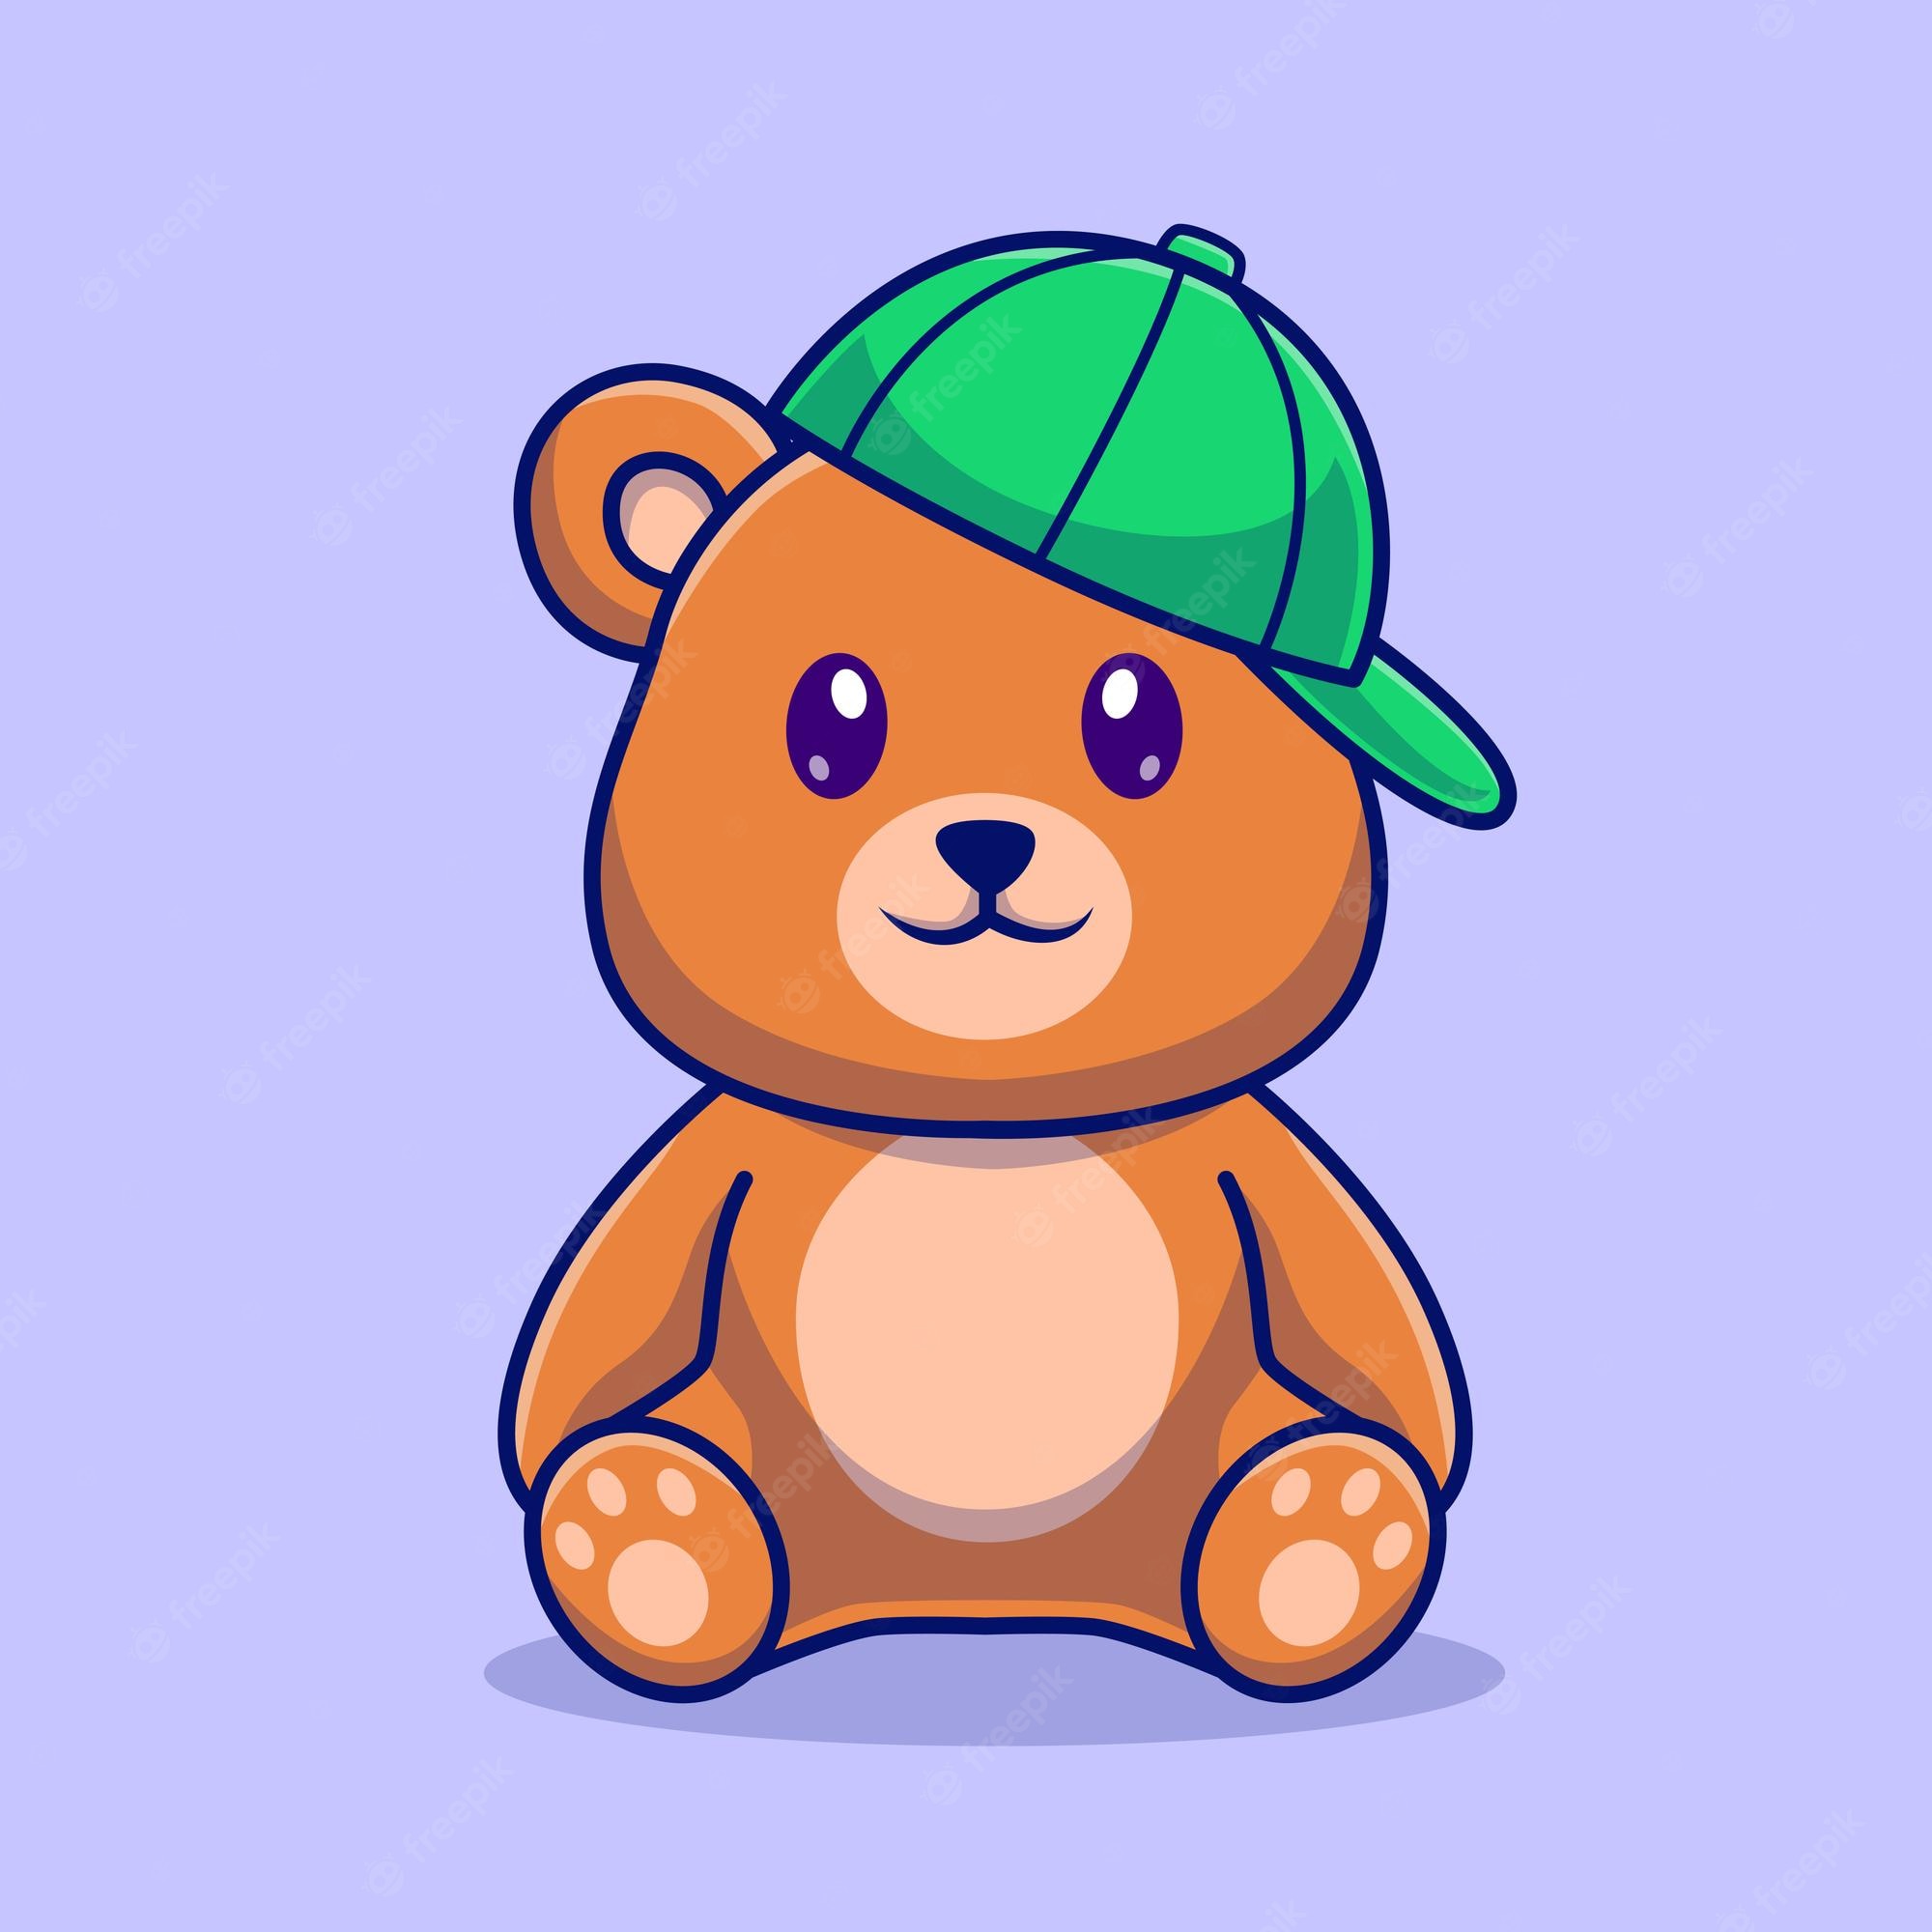 Teddy bear cartoon Image